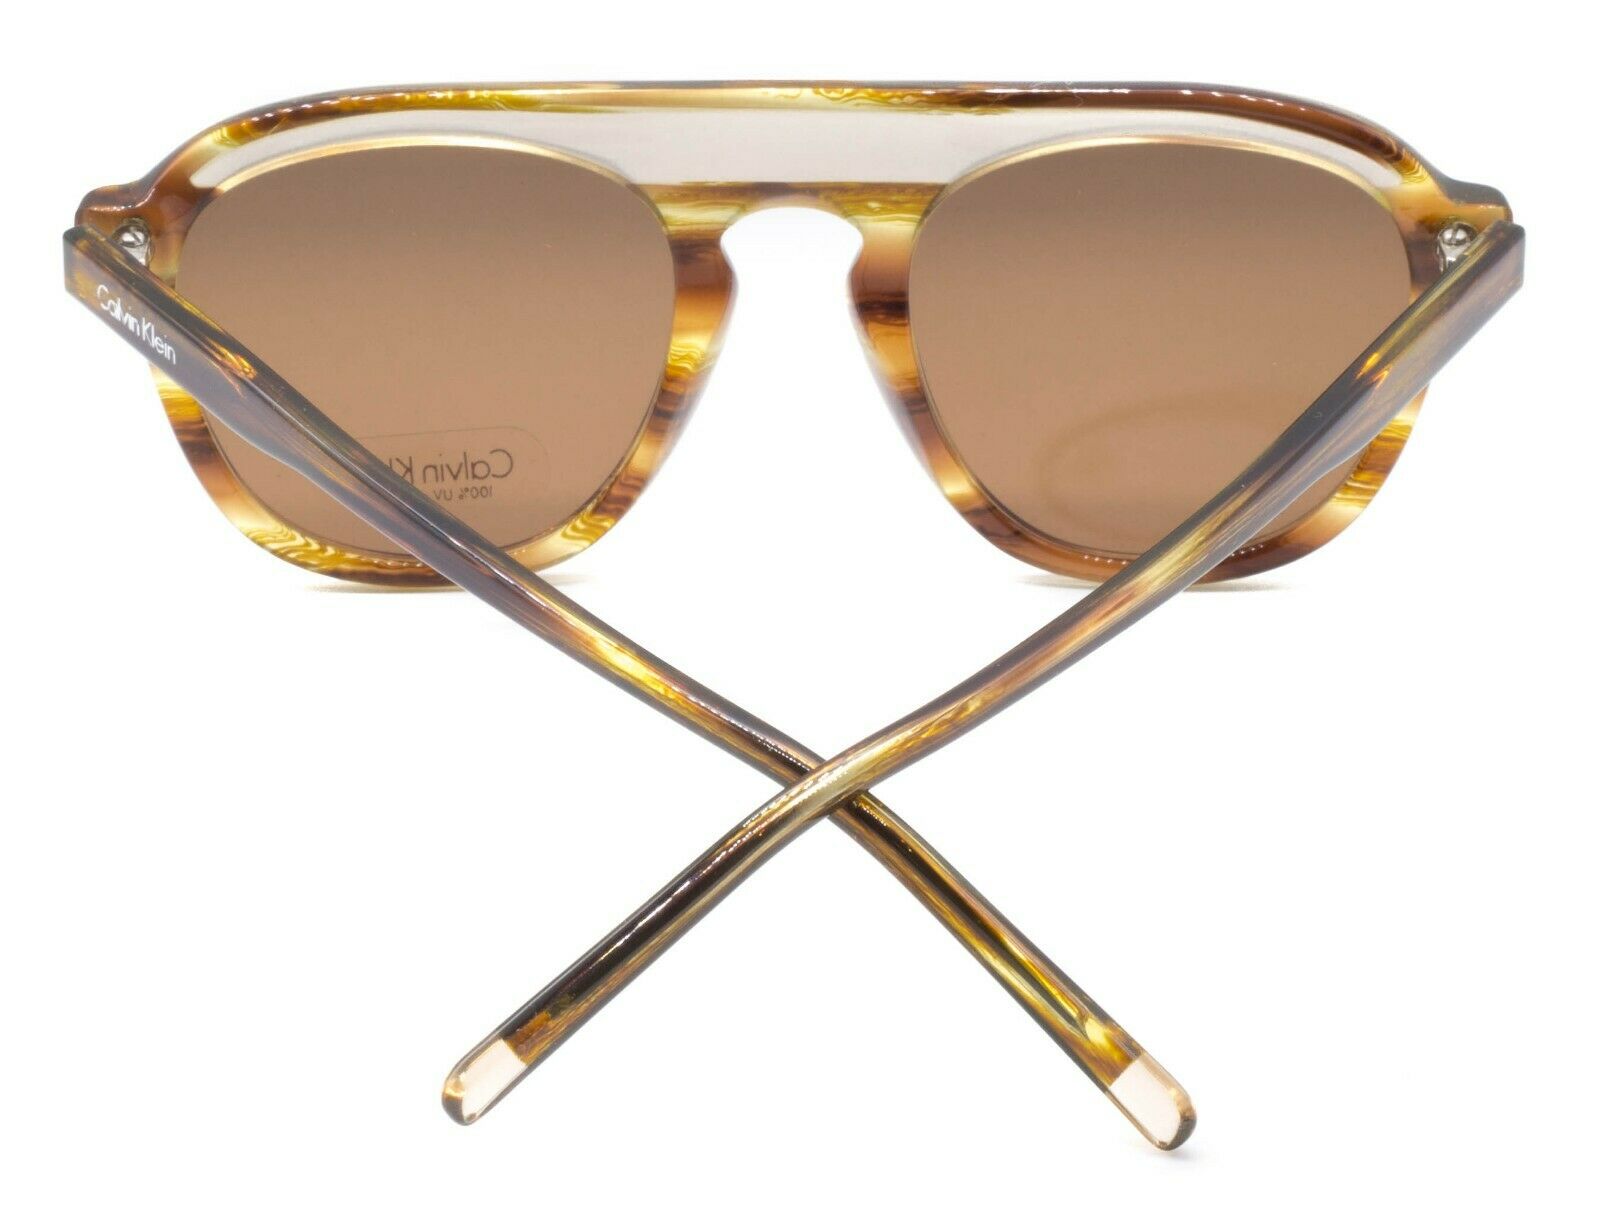 CALVIN KLEIN CK4357s 281 51mm Sunglasses Shades Glasses Frames Eyewear - New